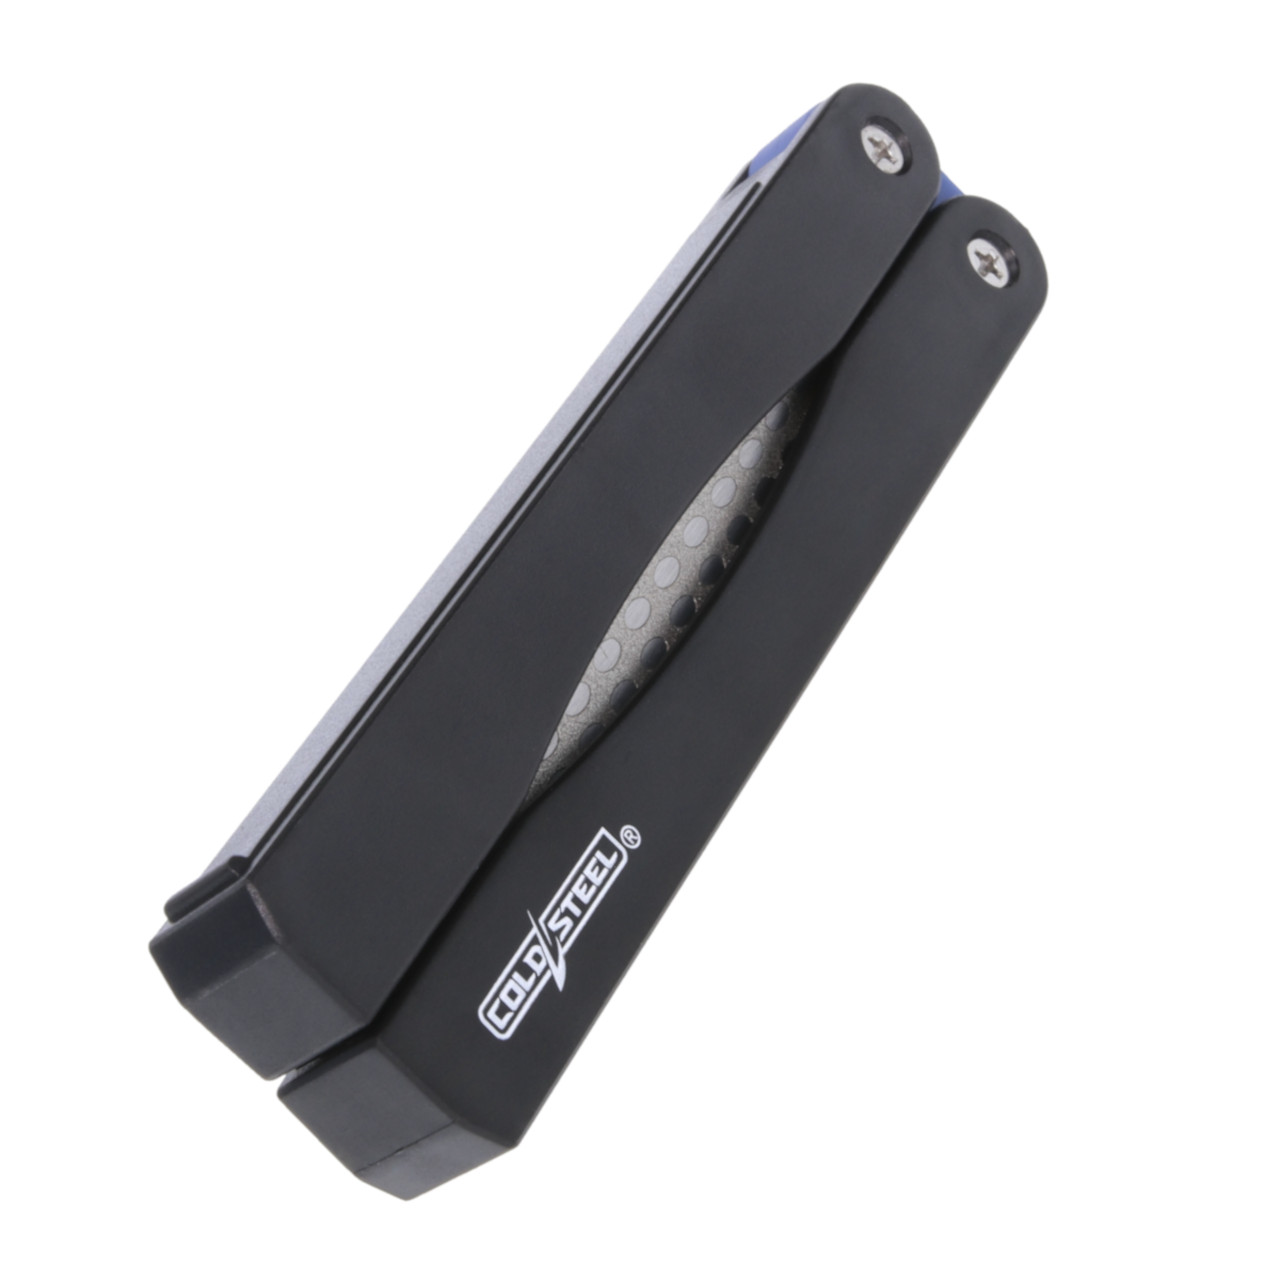 Portable Knife Sharpener Outdoor Double Edge Cutting Blade Sharpener